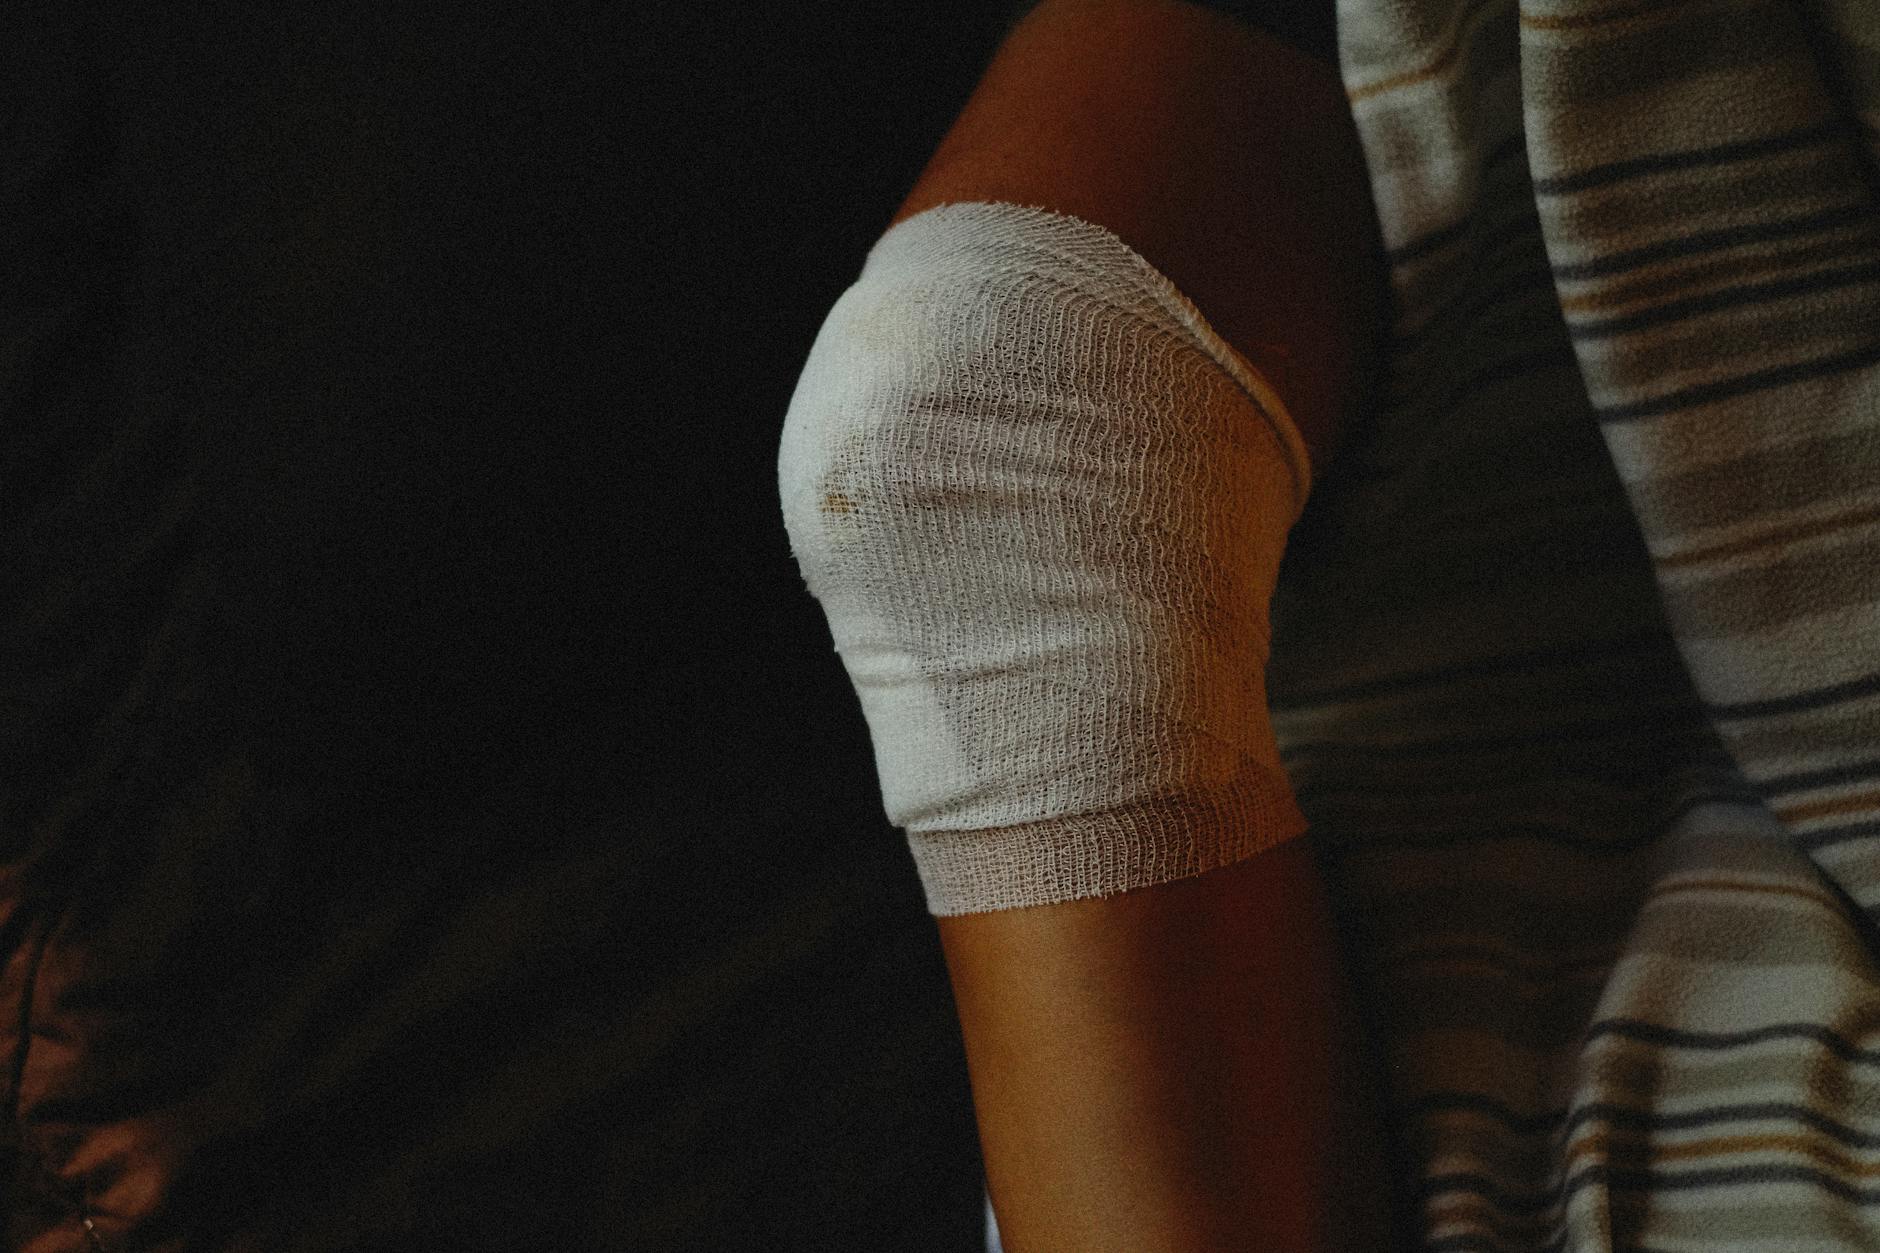 person with medical gauze bandage on injured knee